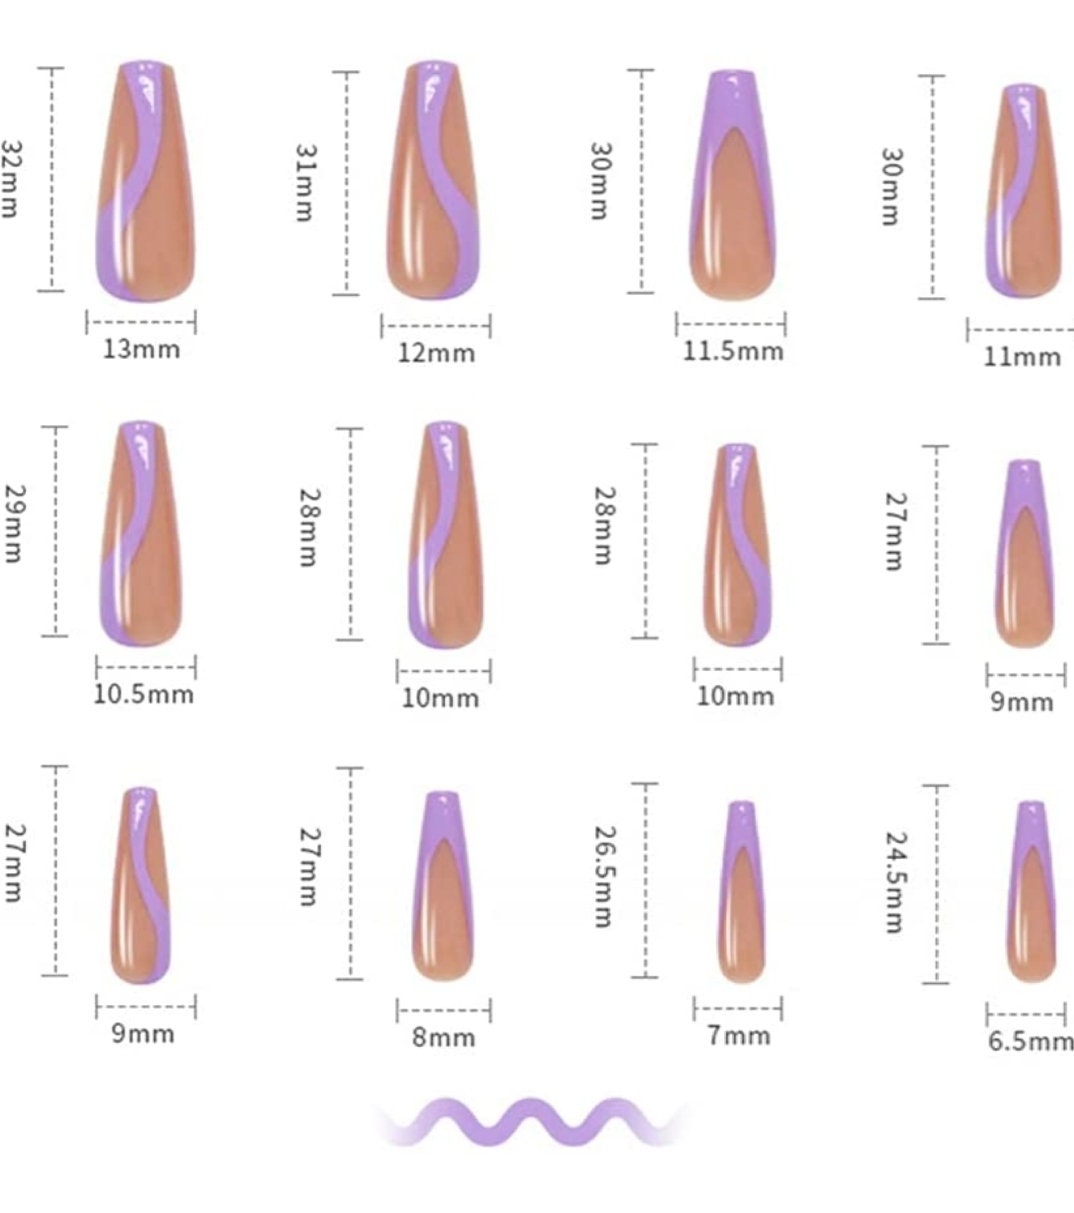 24 Nude Purple Swirl design Press on nails glue on Coffin Long extra manicure beige tan